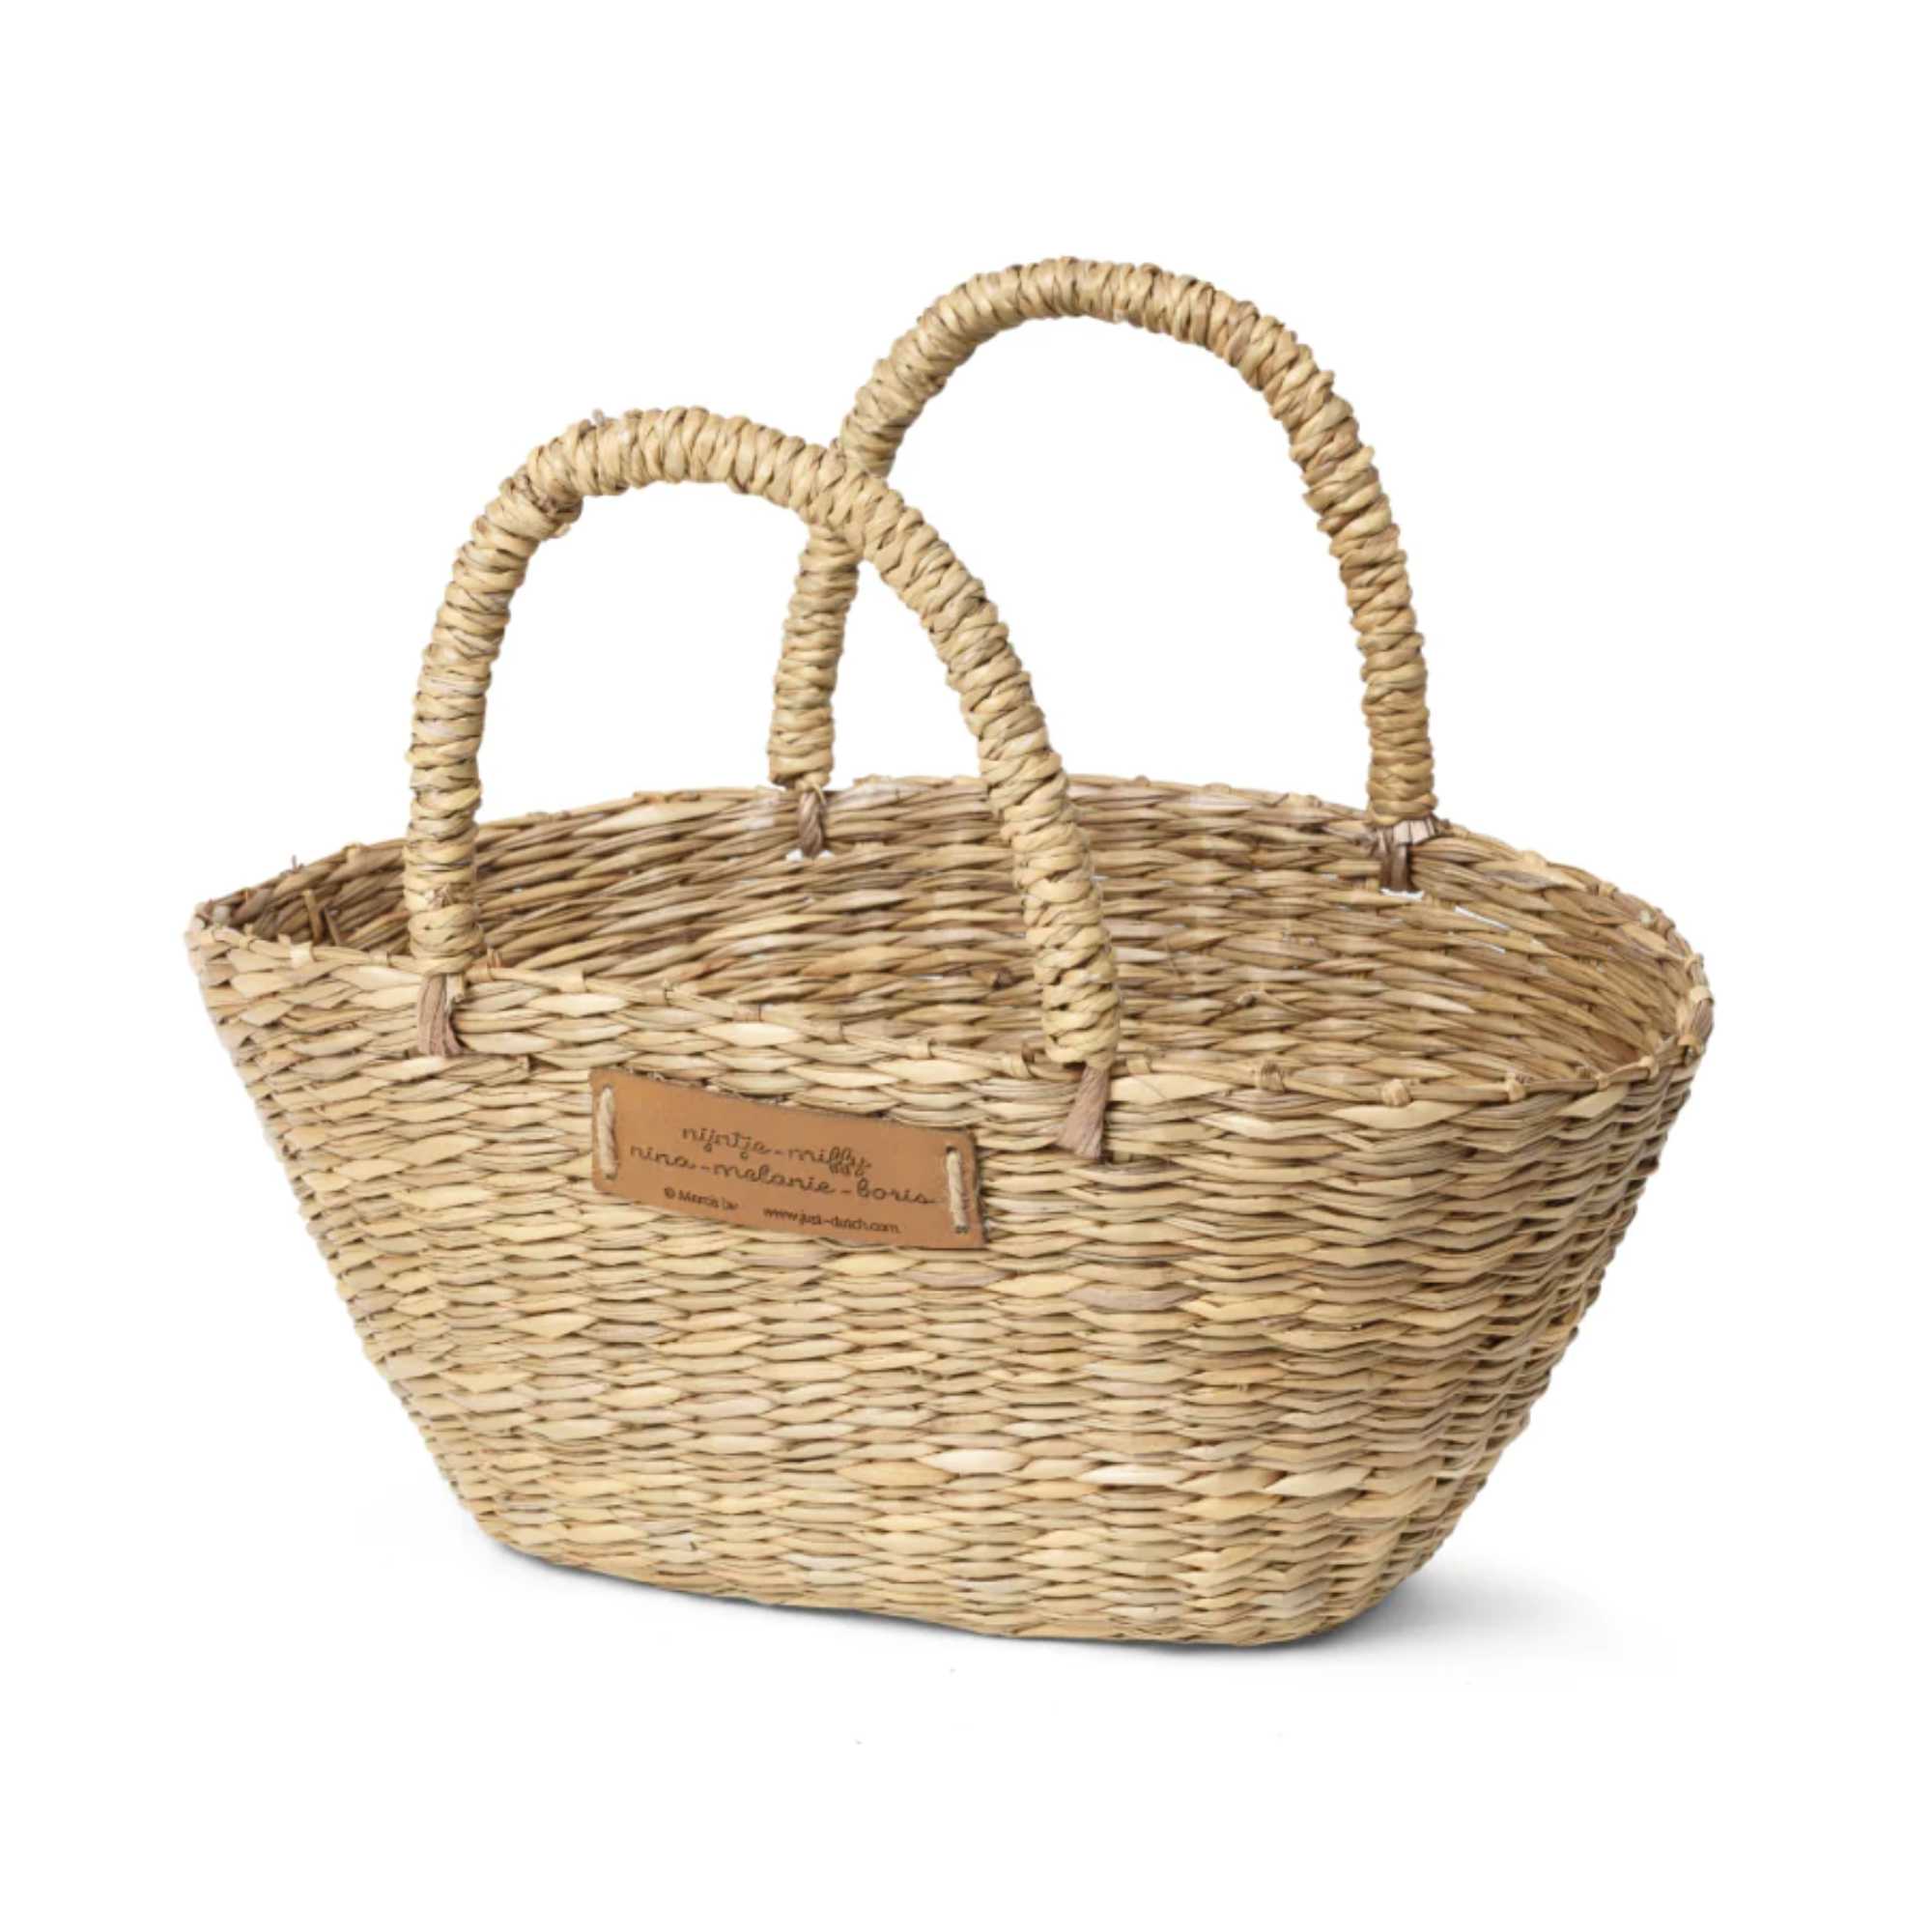 Just Dutch Handmade Basket For Miffy Dolls, Natural